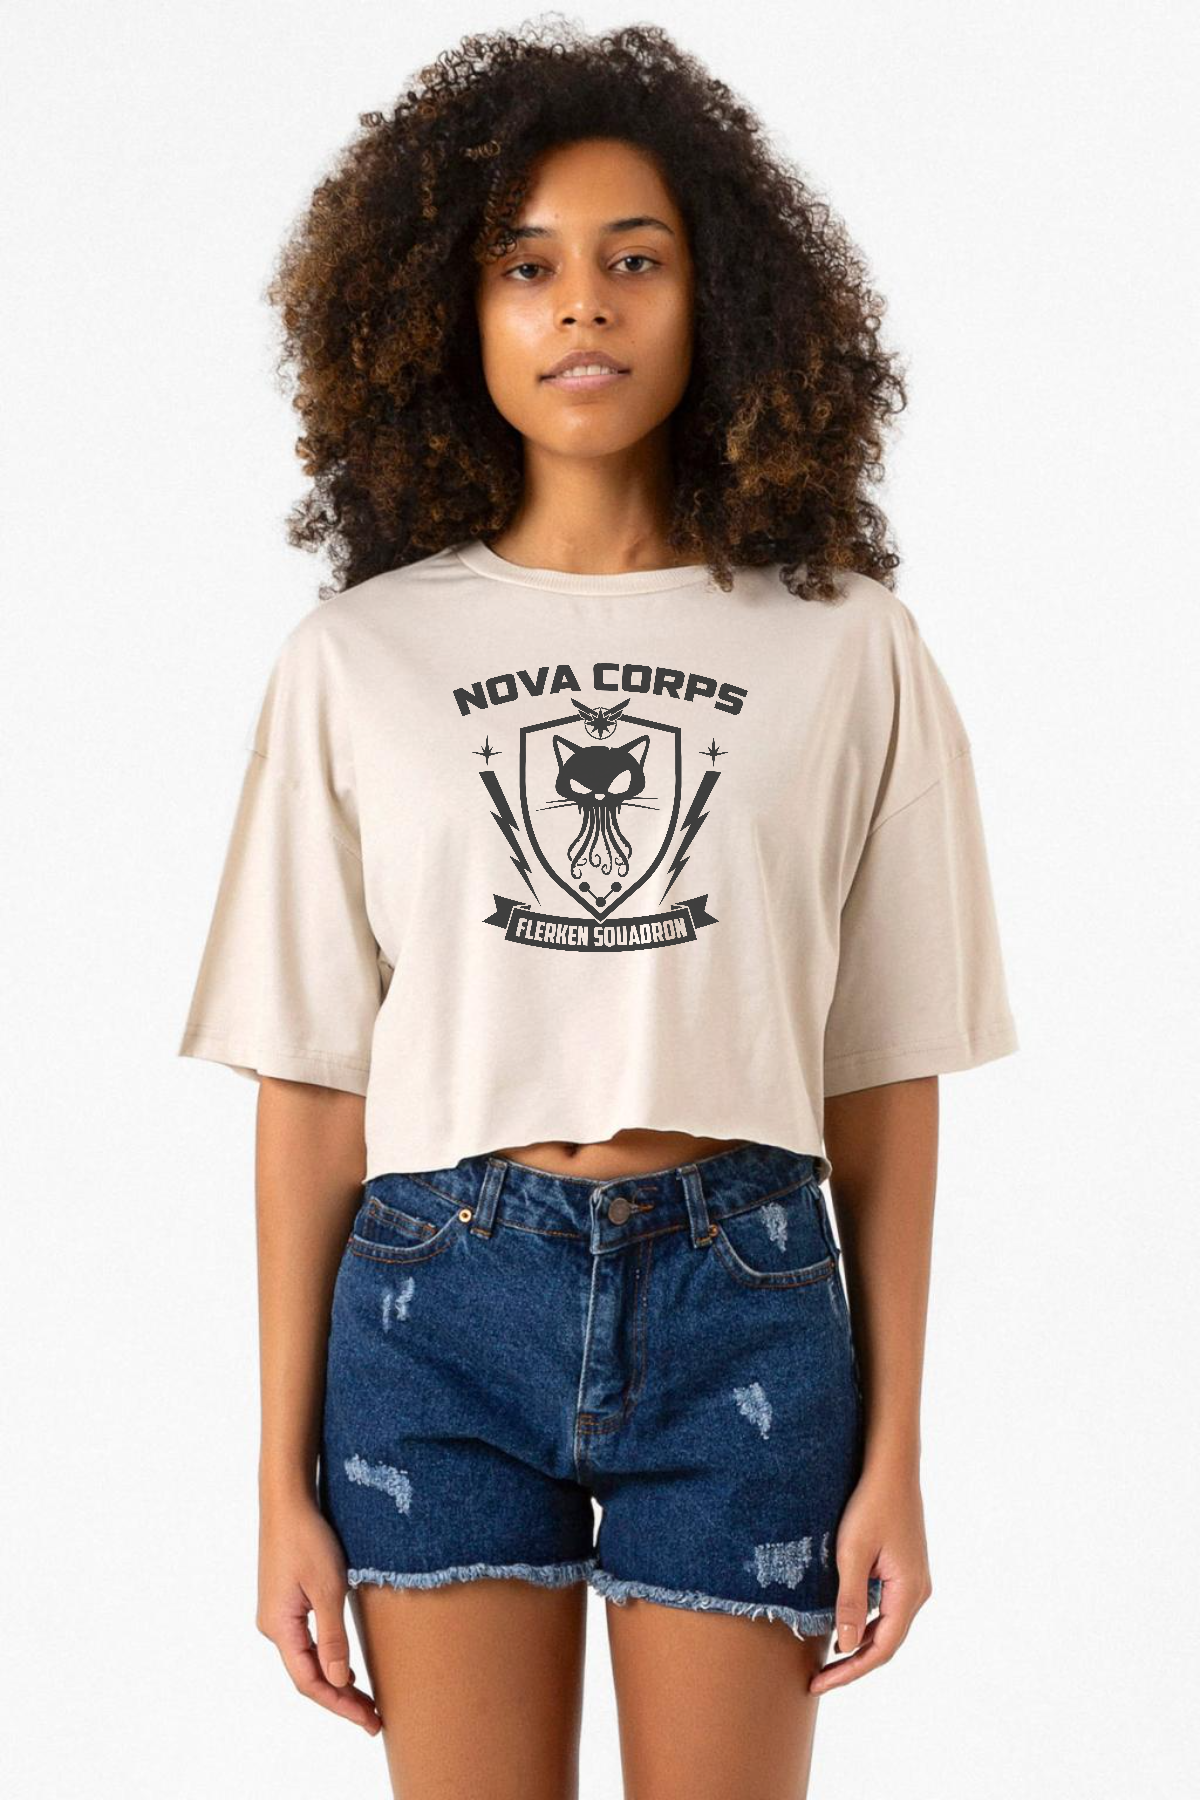 Nova Corps Flerken Squadron Bej Kadın Crop Tshirt